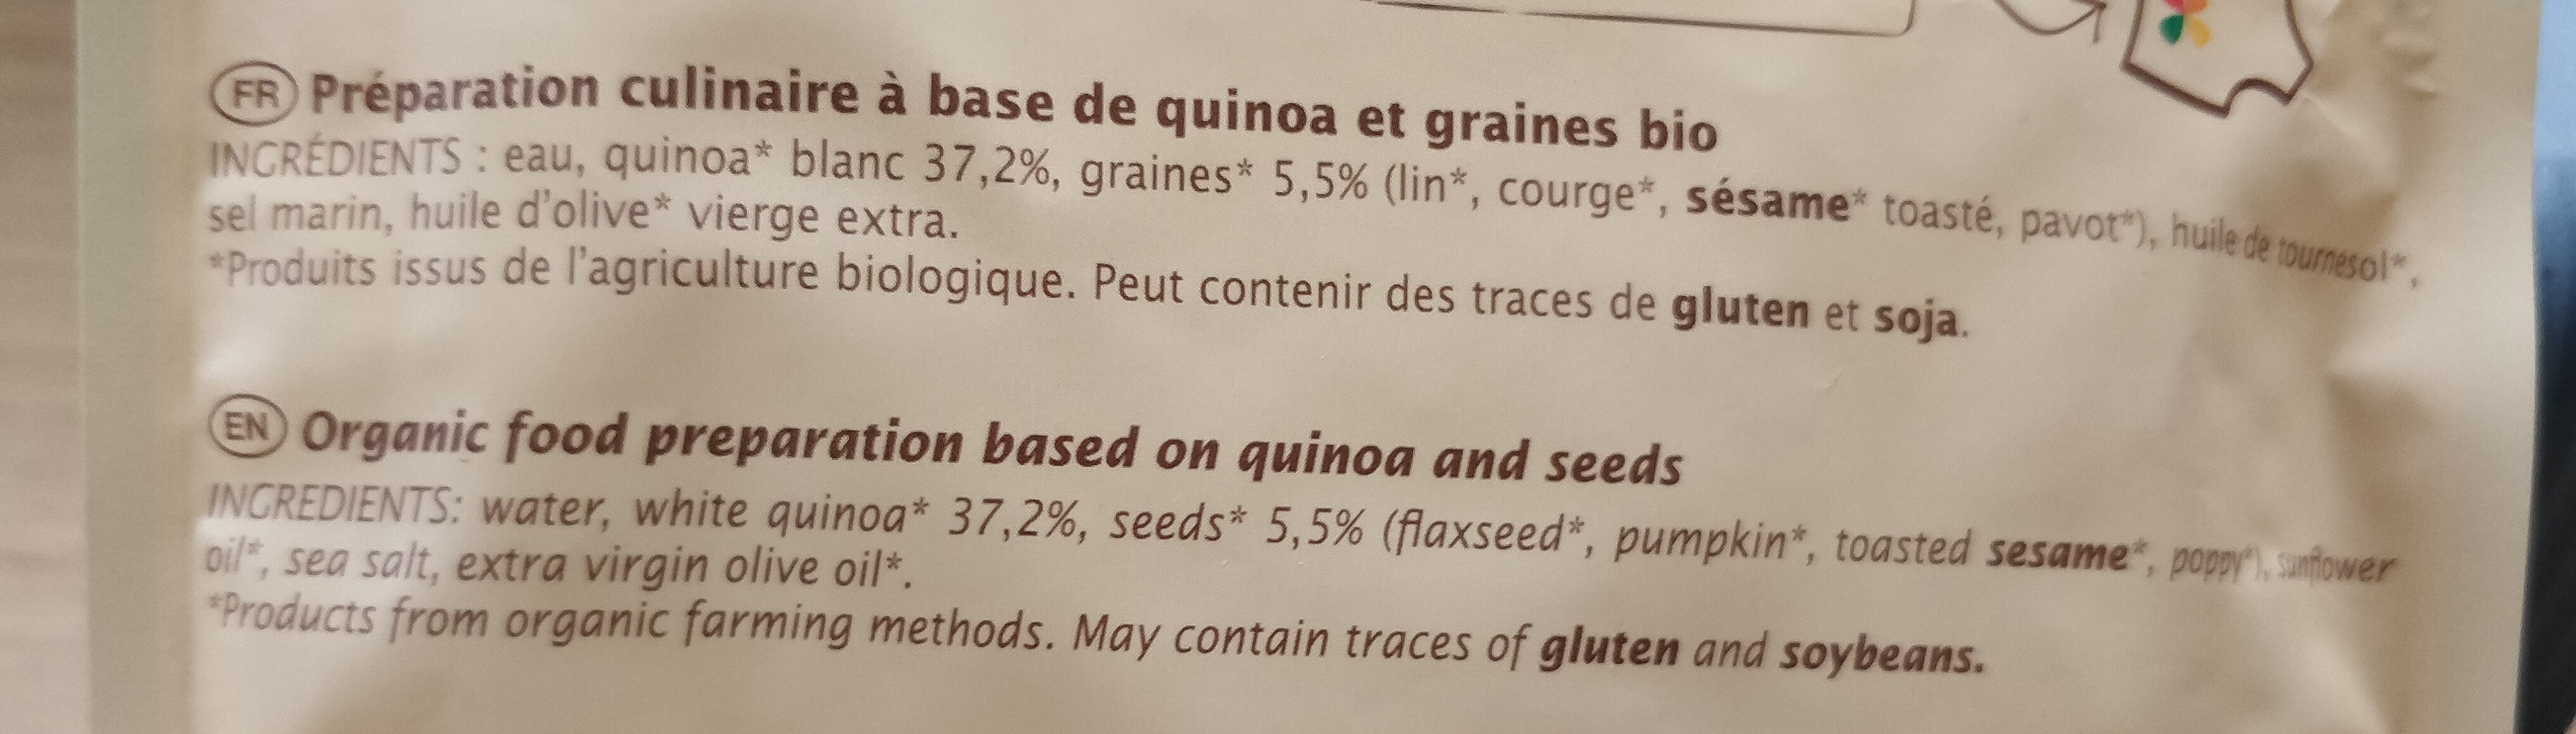 Quinoa graines gourmandes - Ingrédients